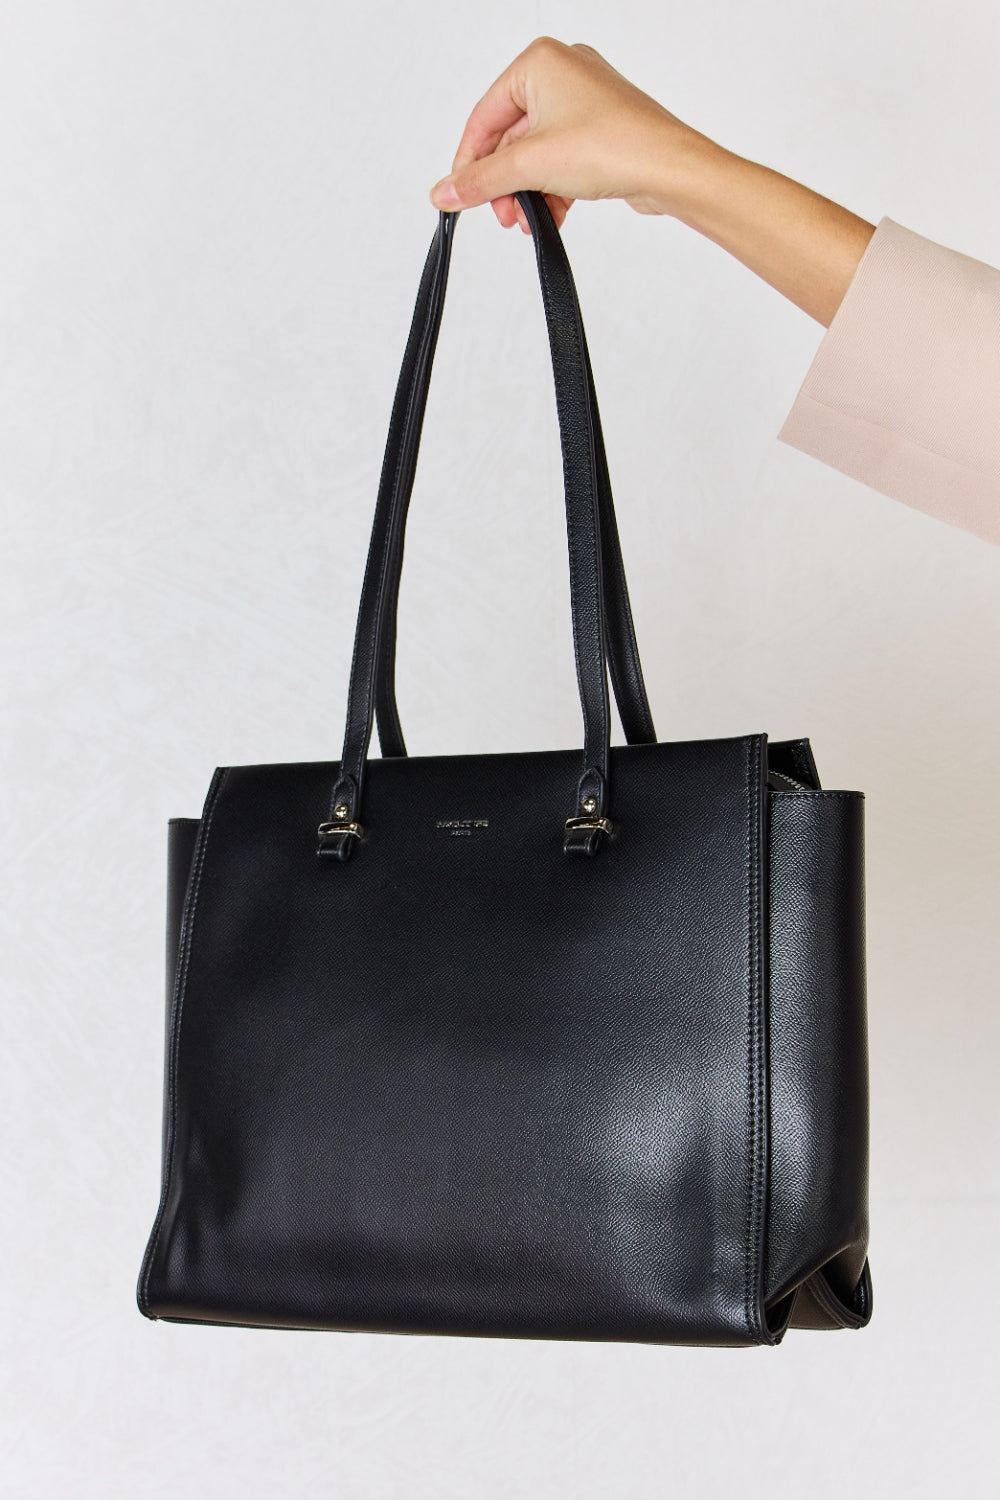 Medium Tote Handbag - Inspired Eye Boutique